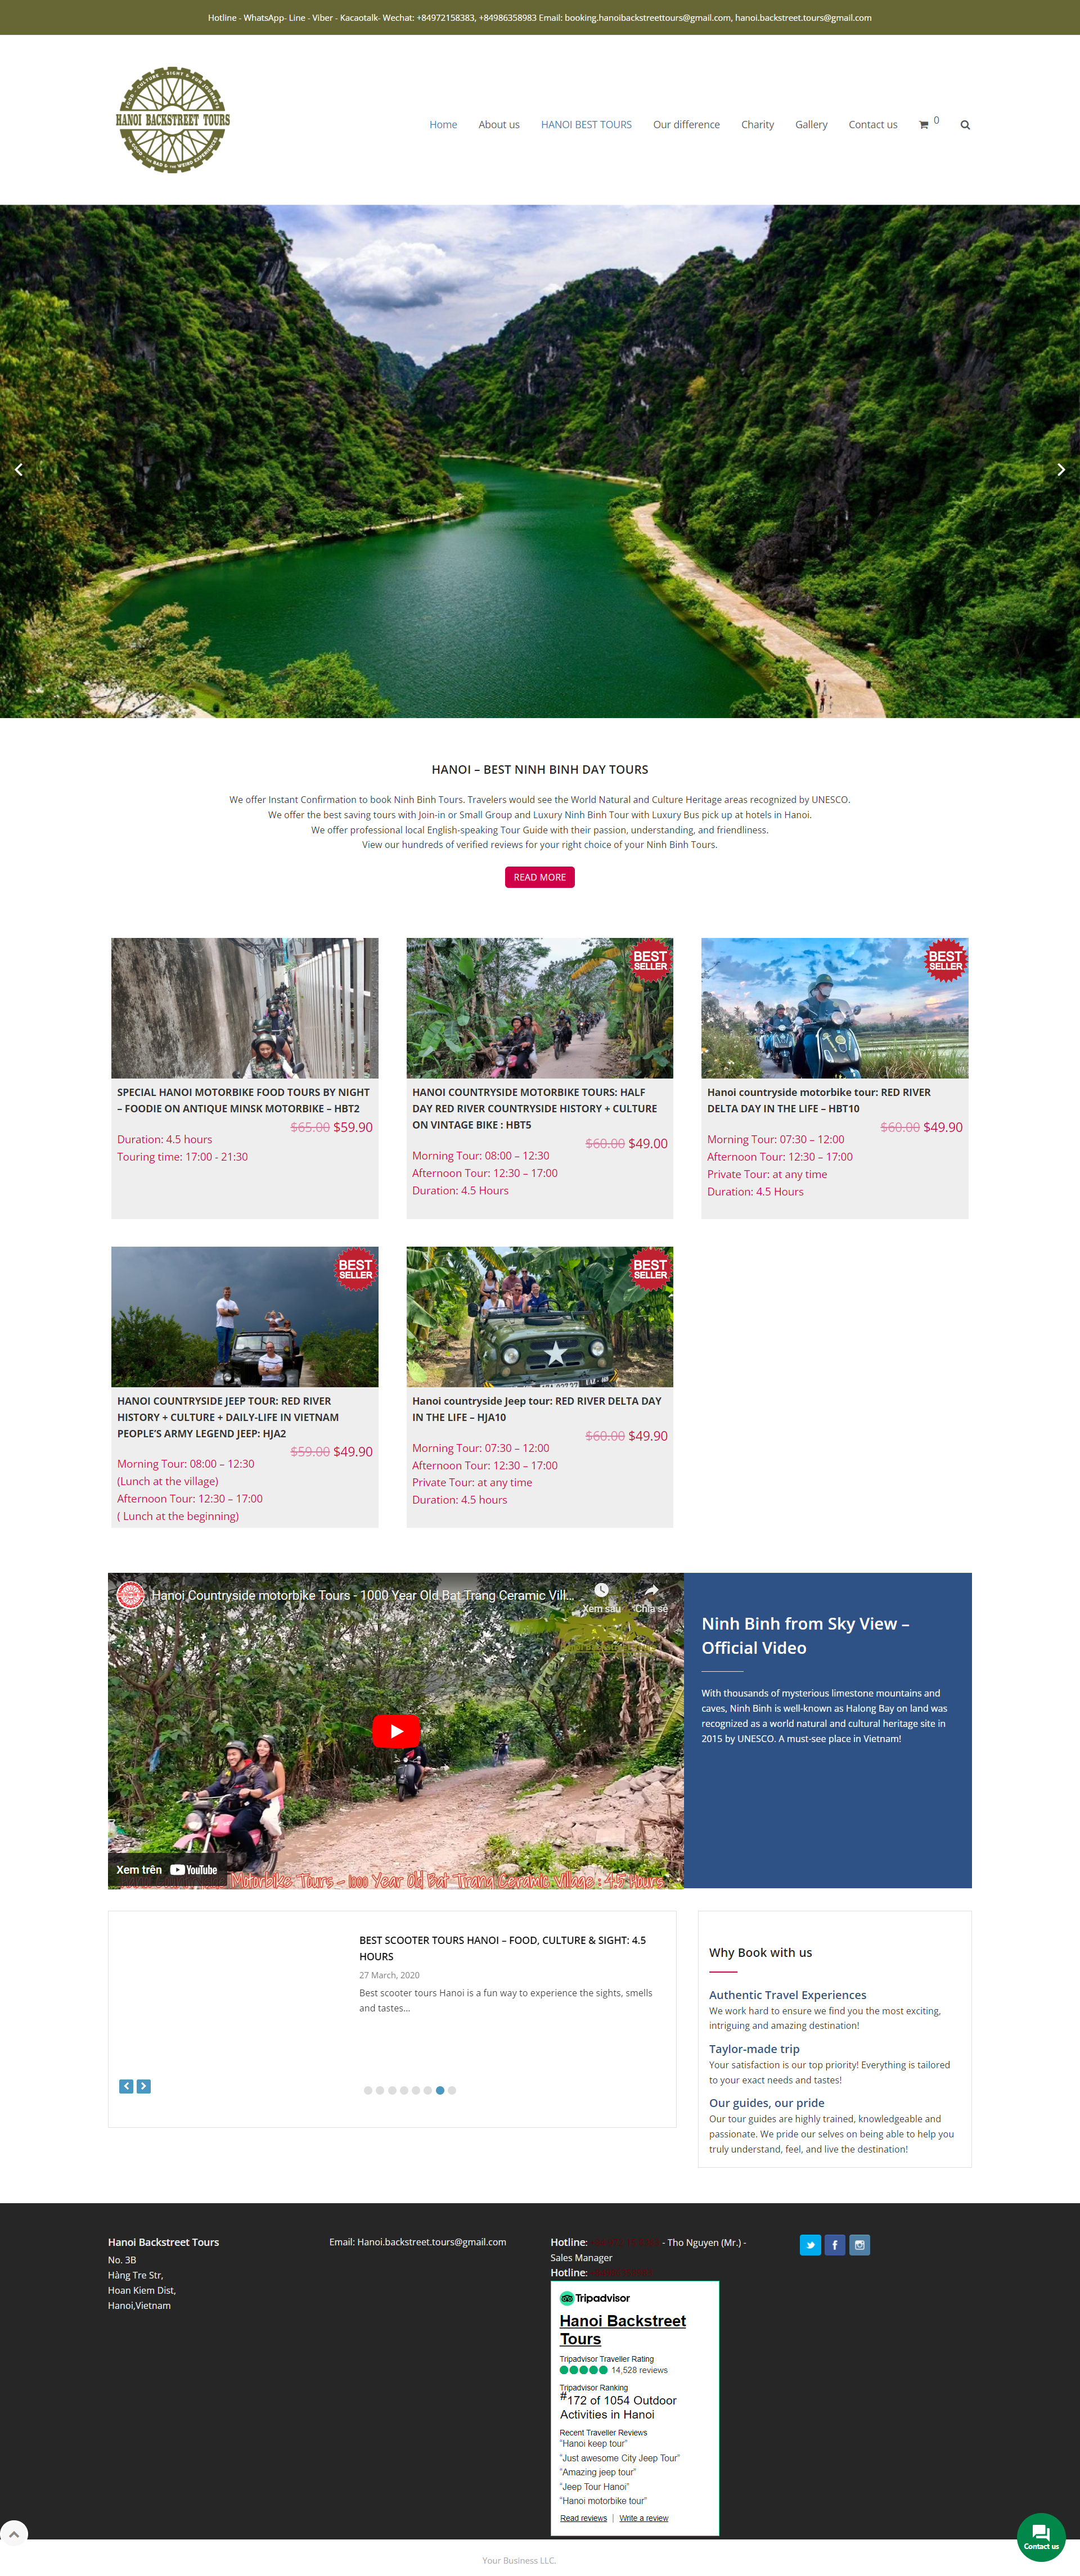 Website Book Tour du lịch bằng xe máy